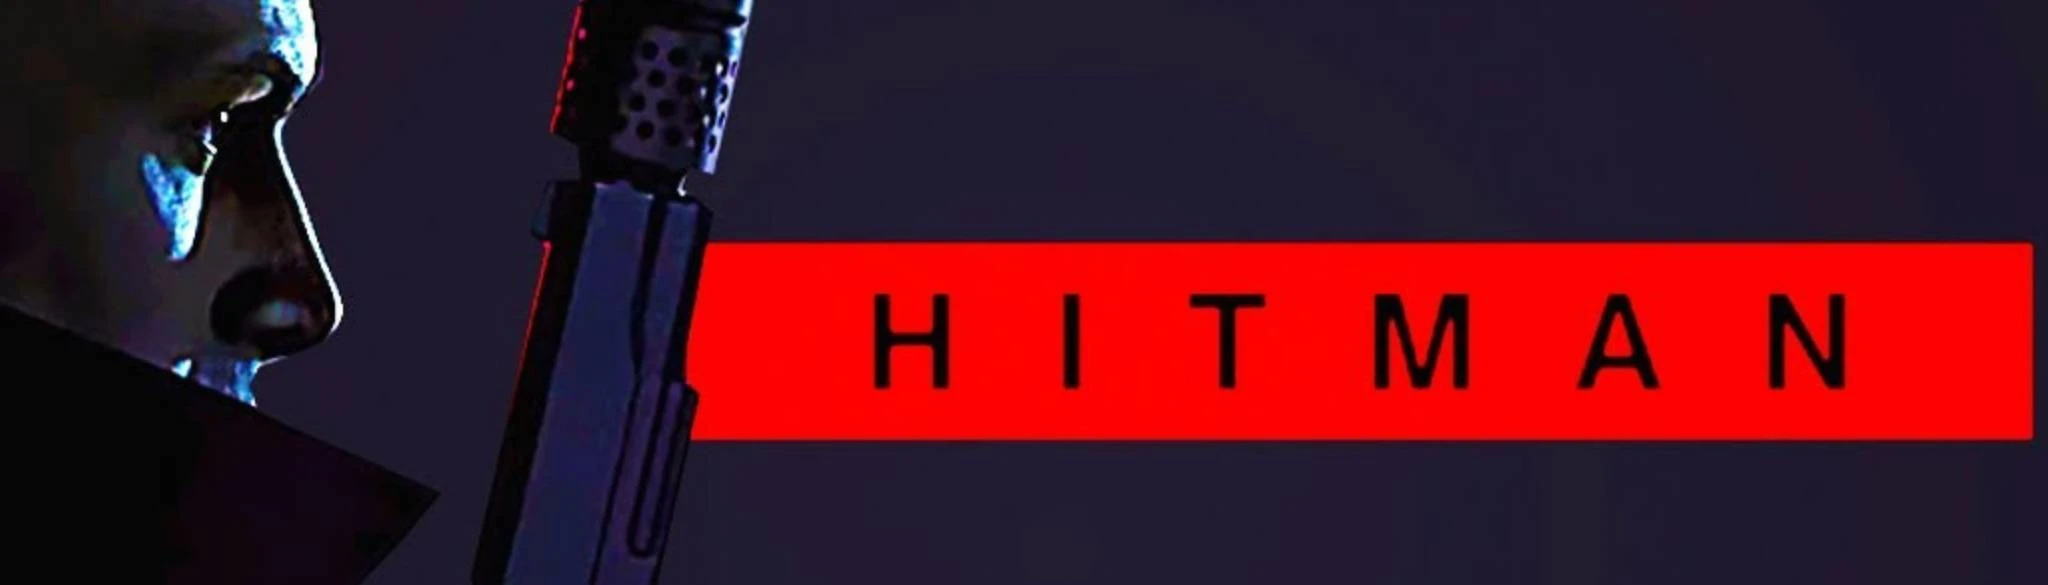 HITMAN 3 - PC save icon keeps appearing : r/HiTMAN